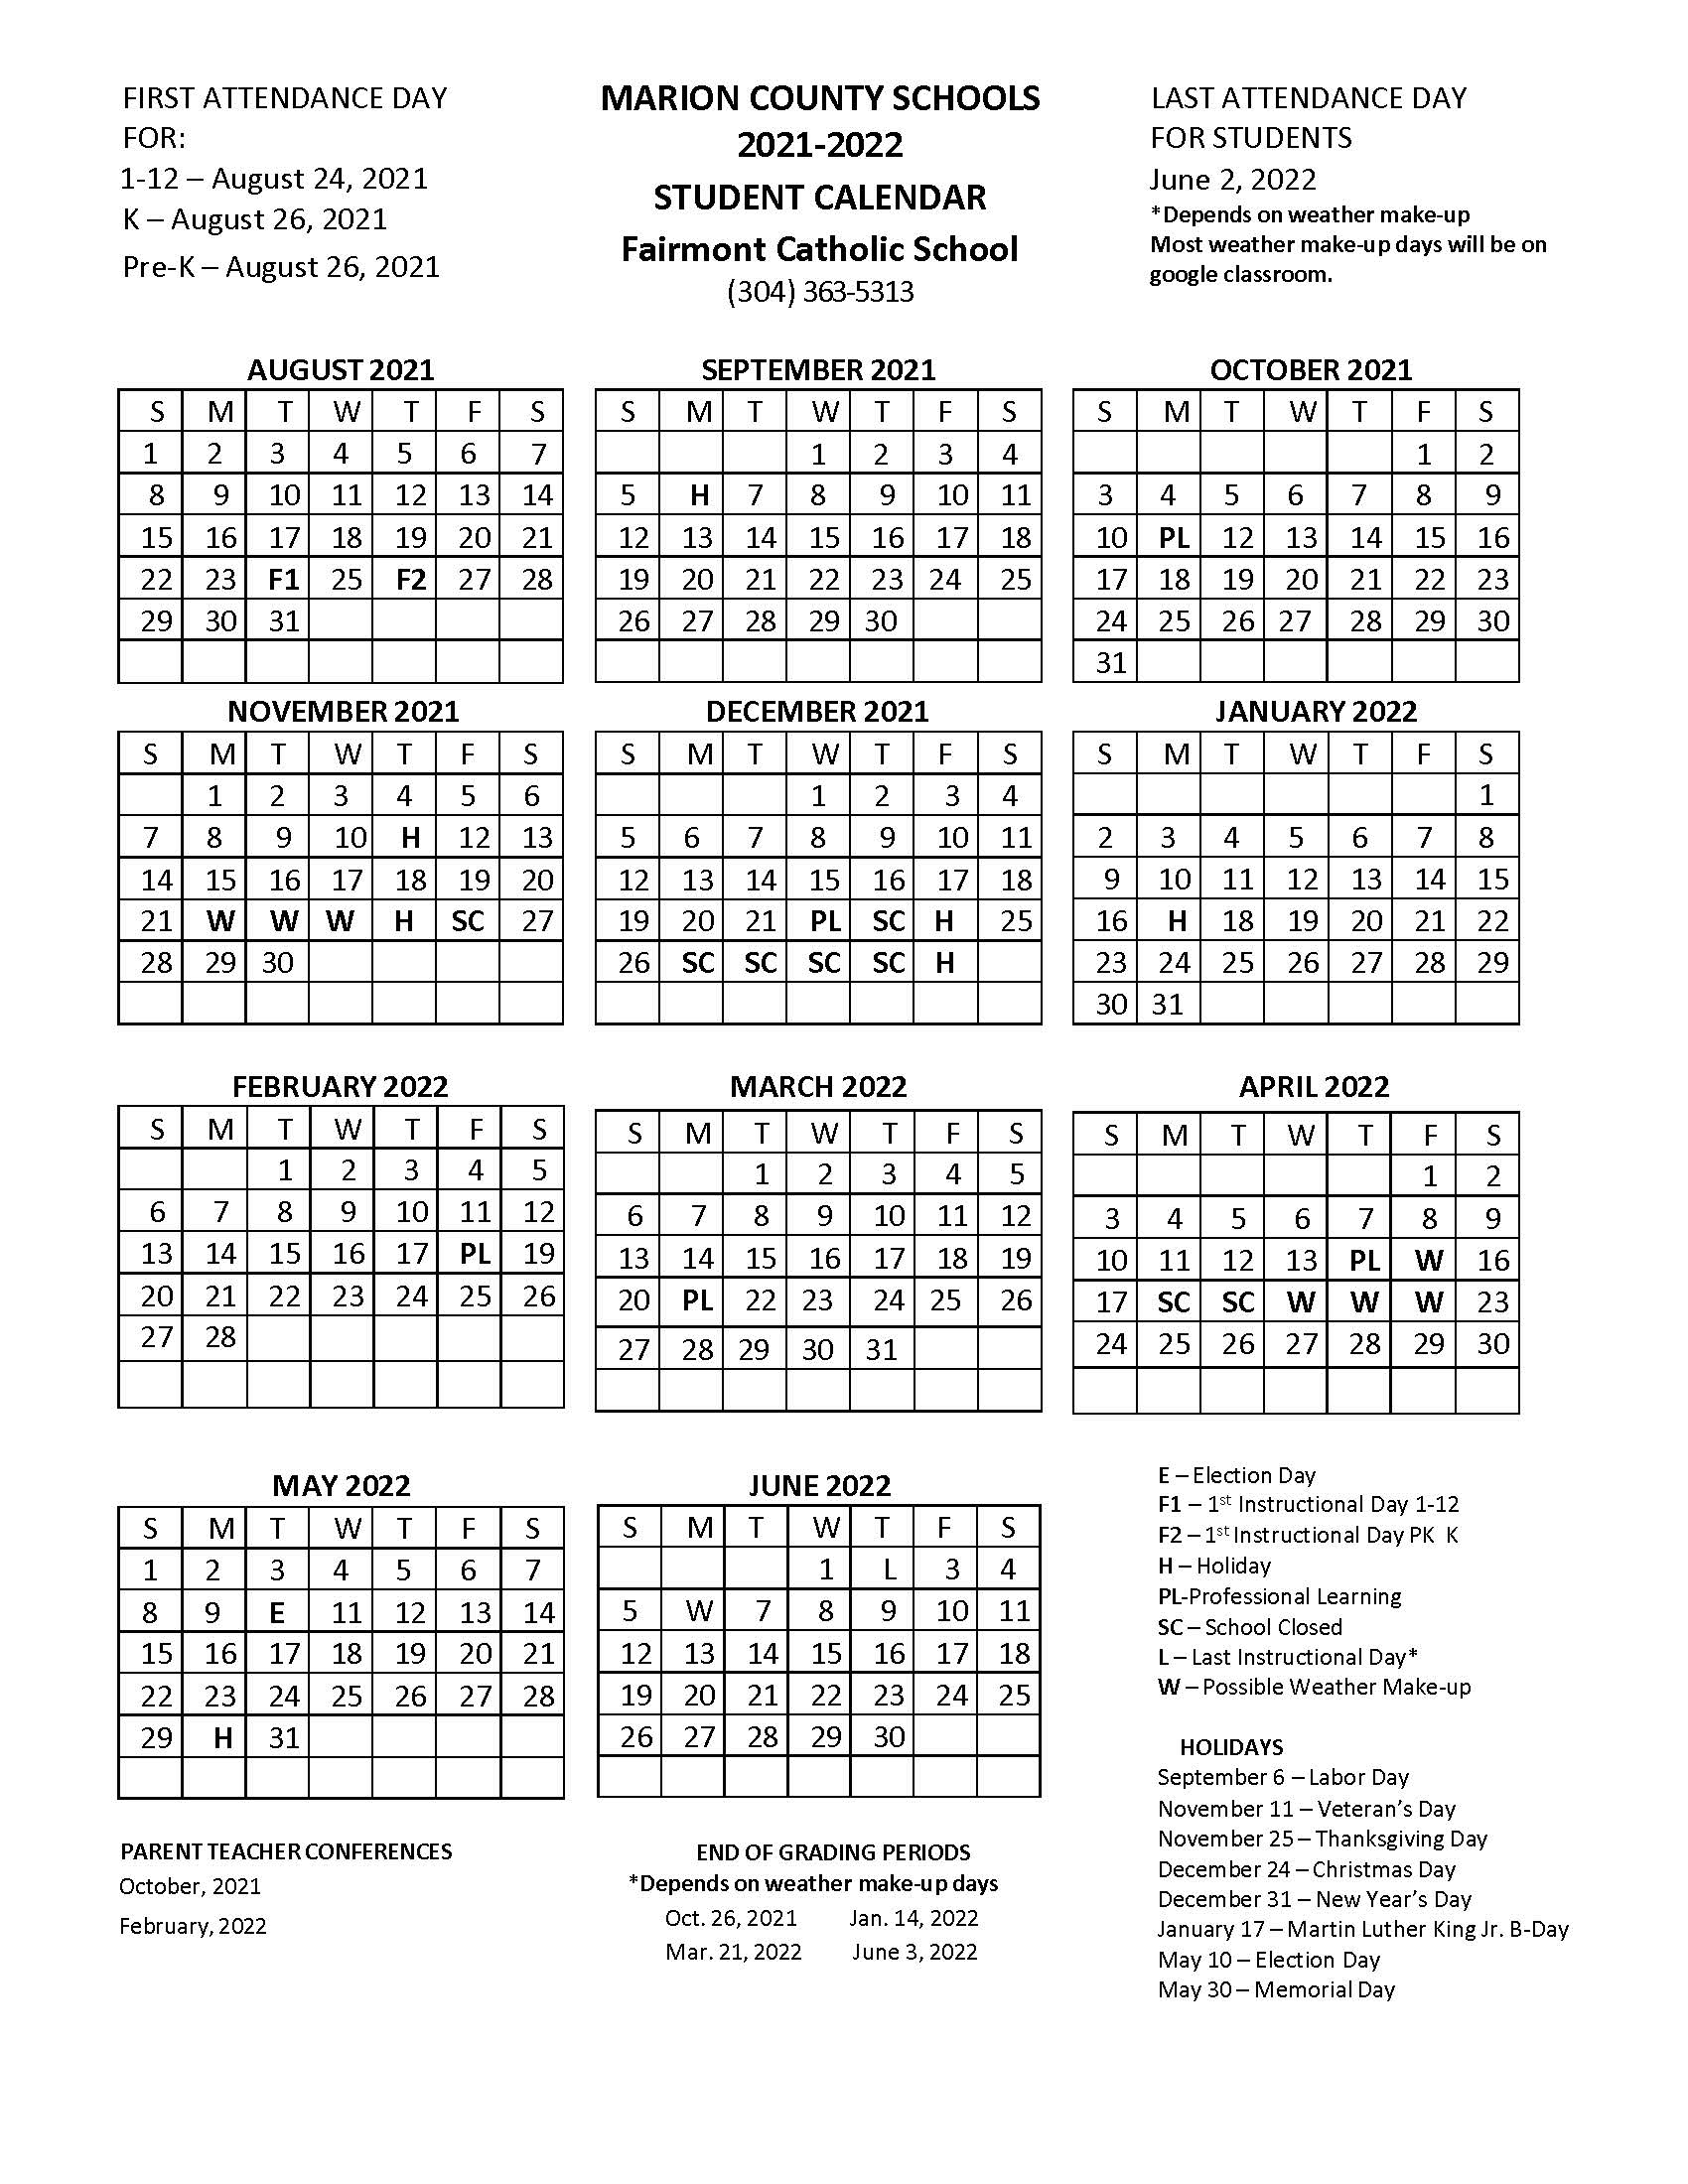 Marion Student Calendar 20212022 Calendar Fairmont Catholic School